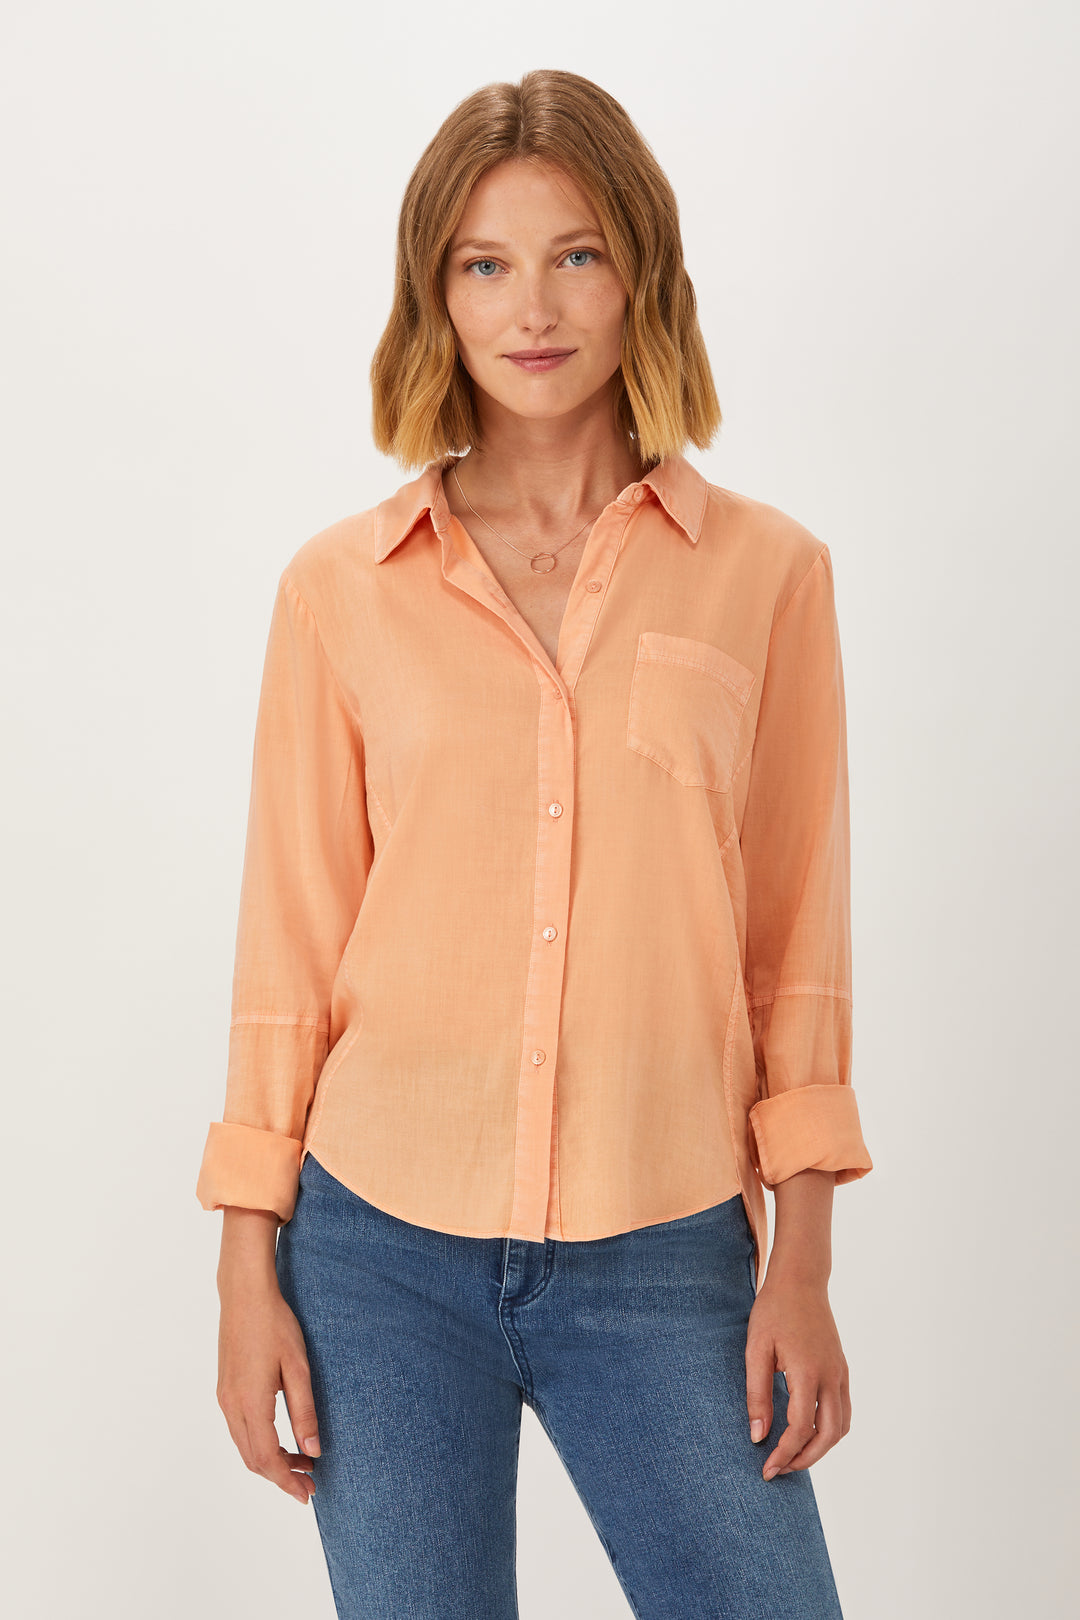 Hepburn New Classic Shirt - Apricot